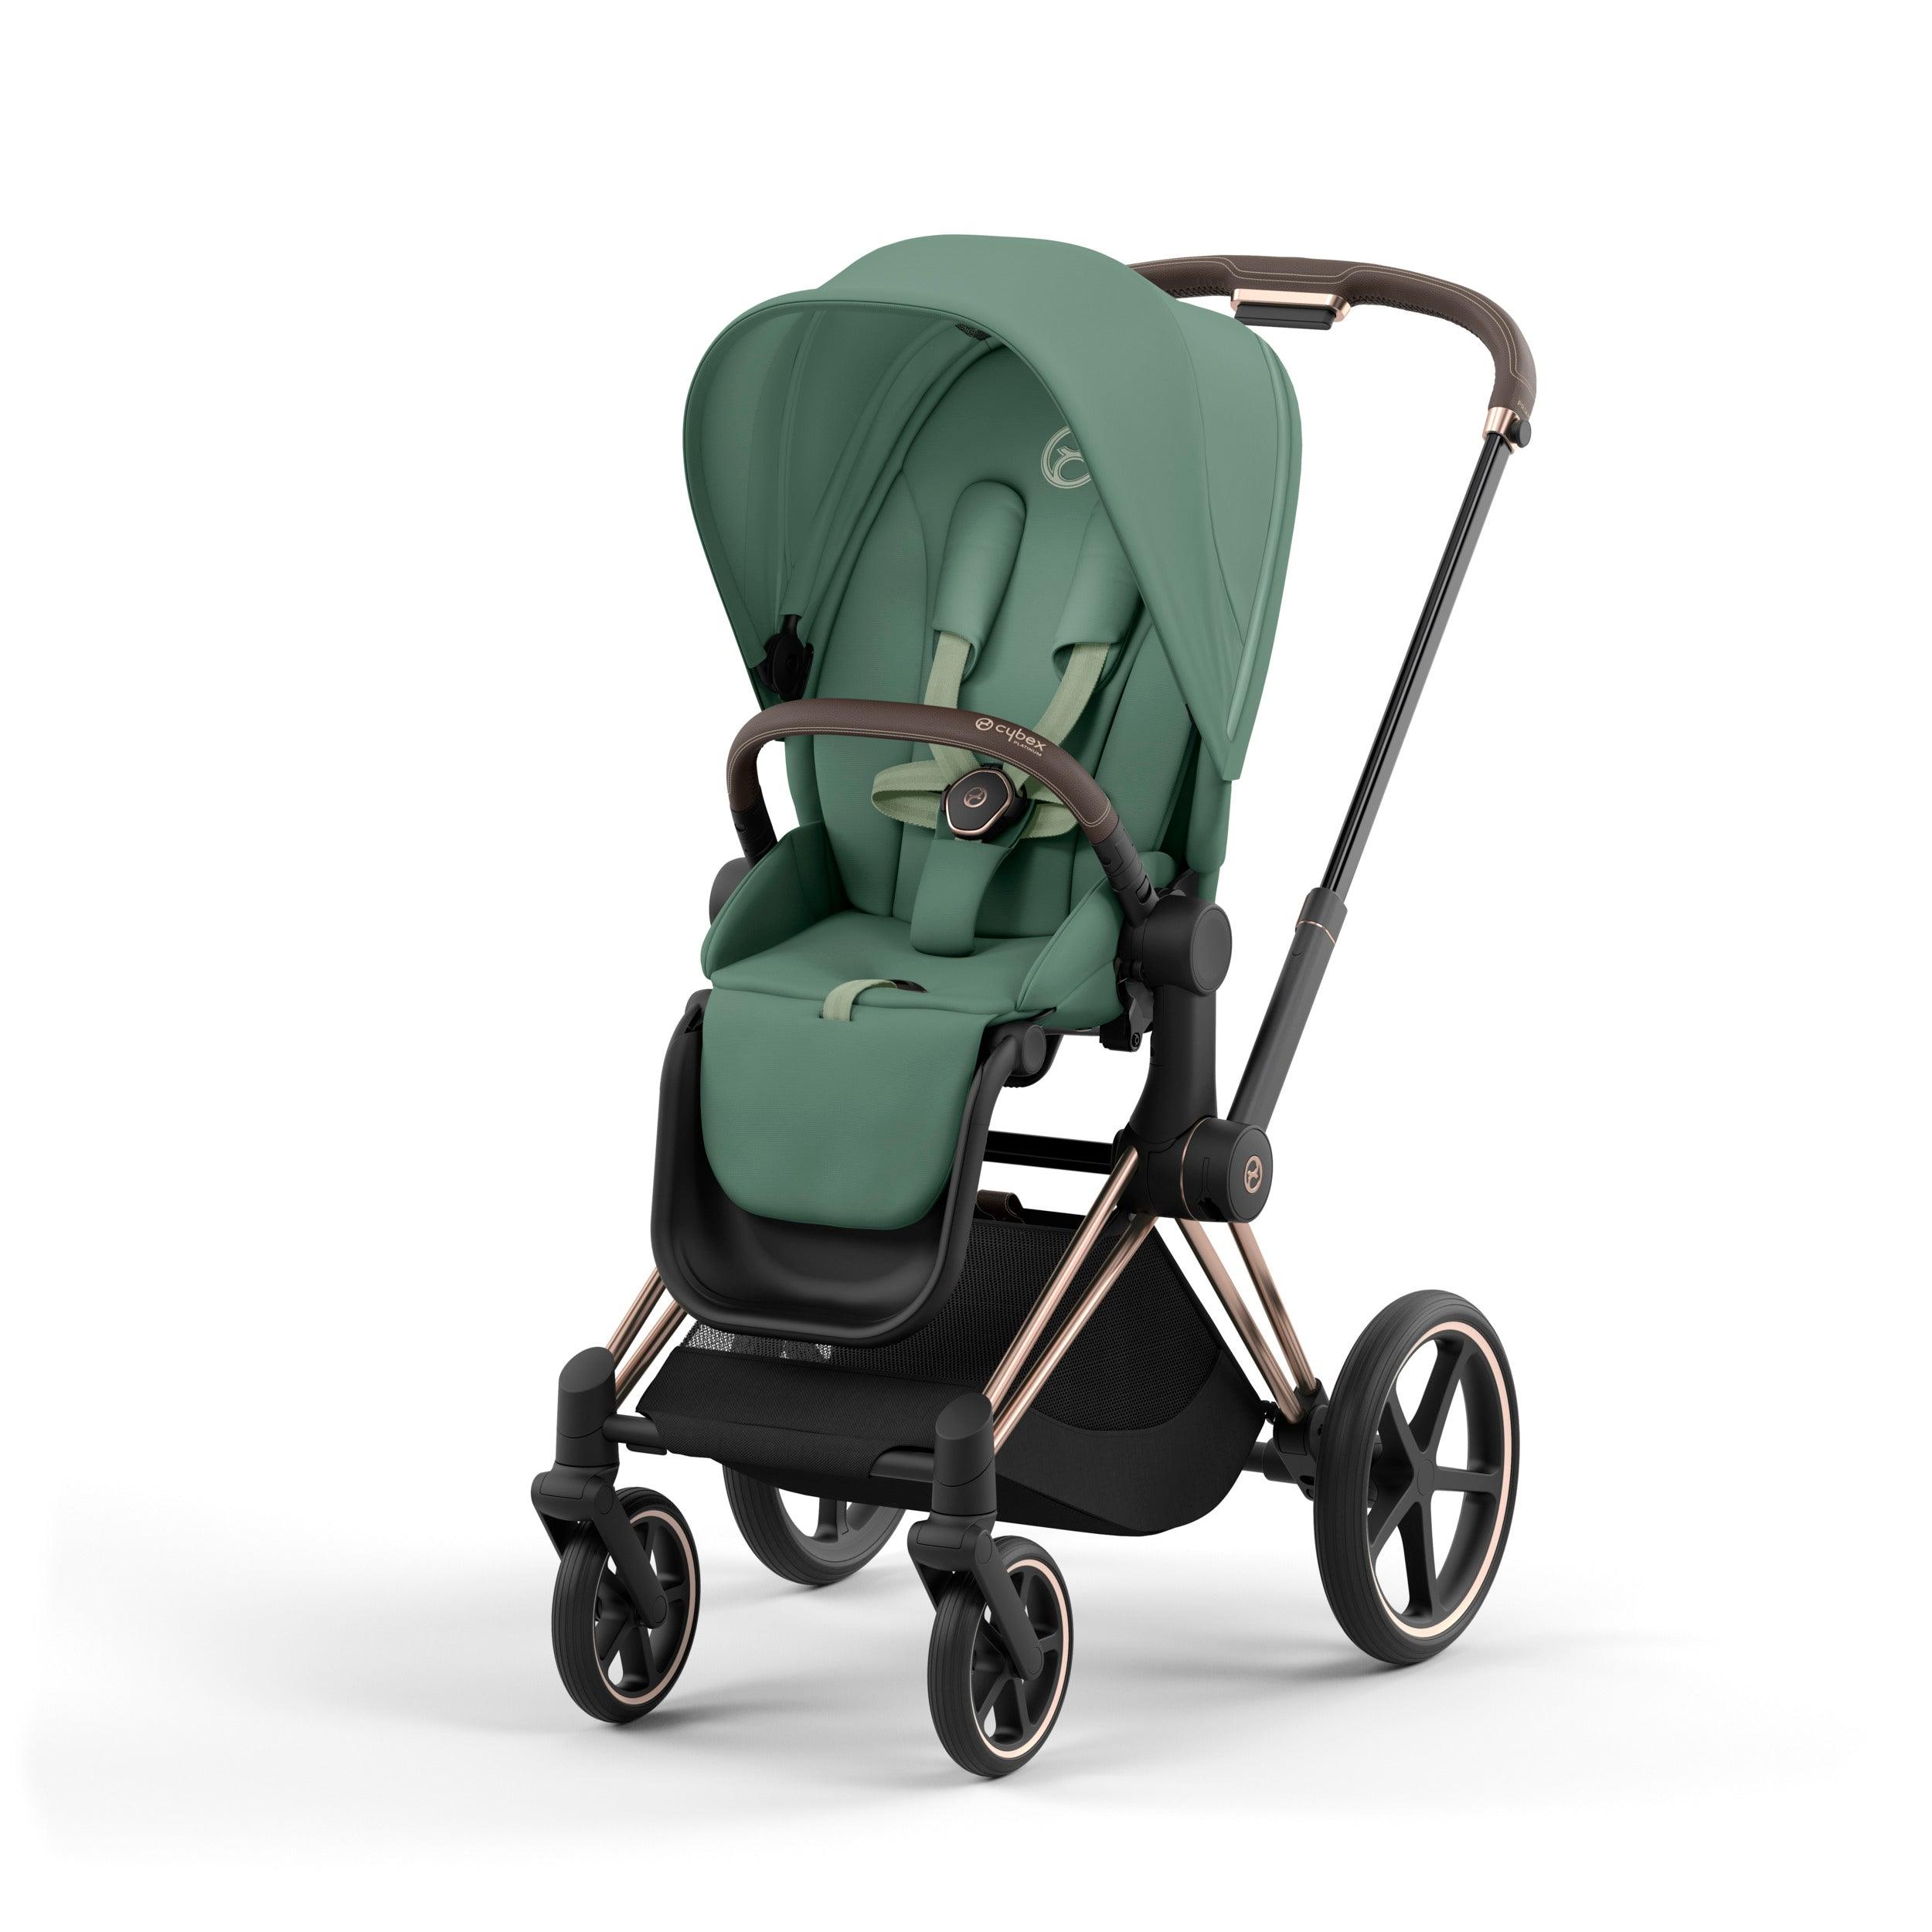 CYBEX Priam Baby Stroller in Leaf Green & Rosegold Frame